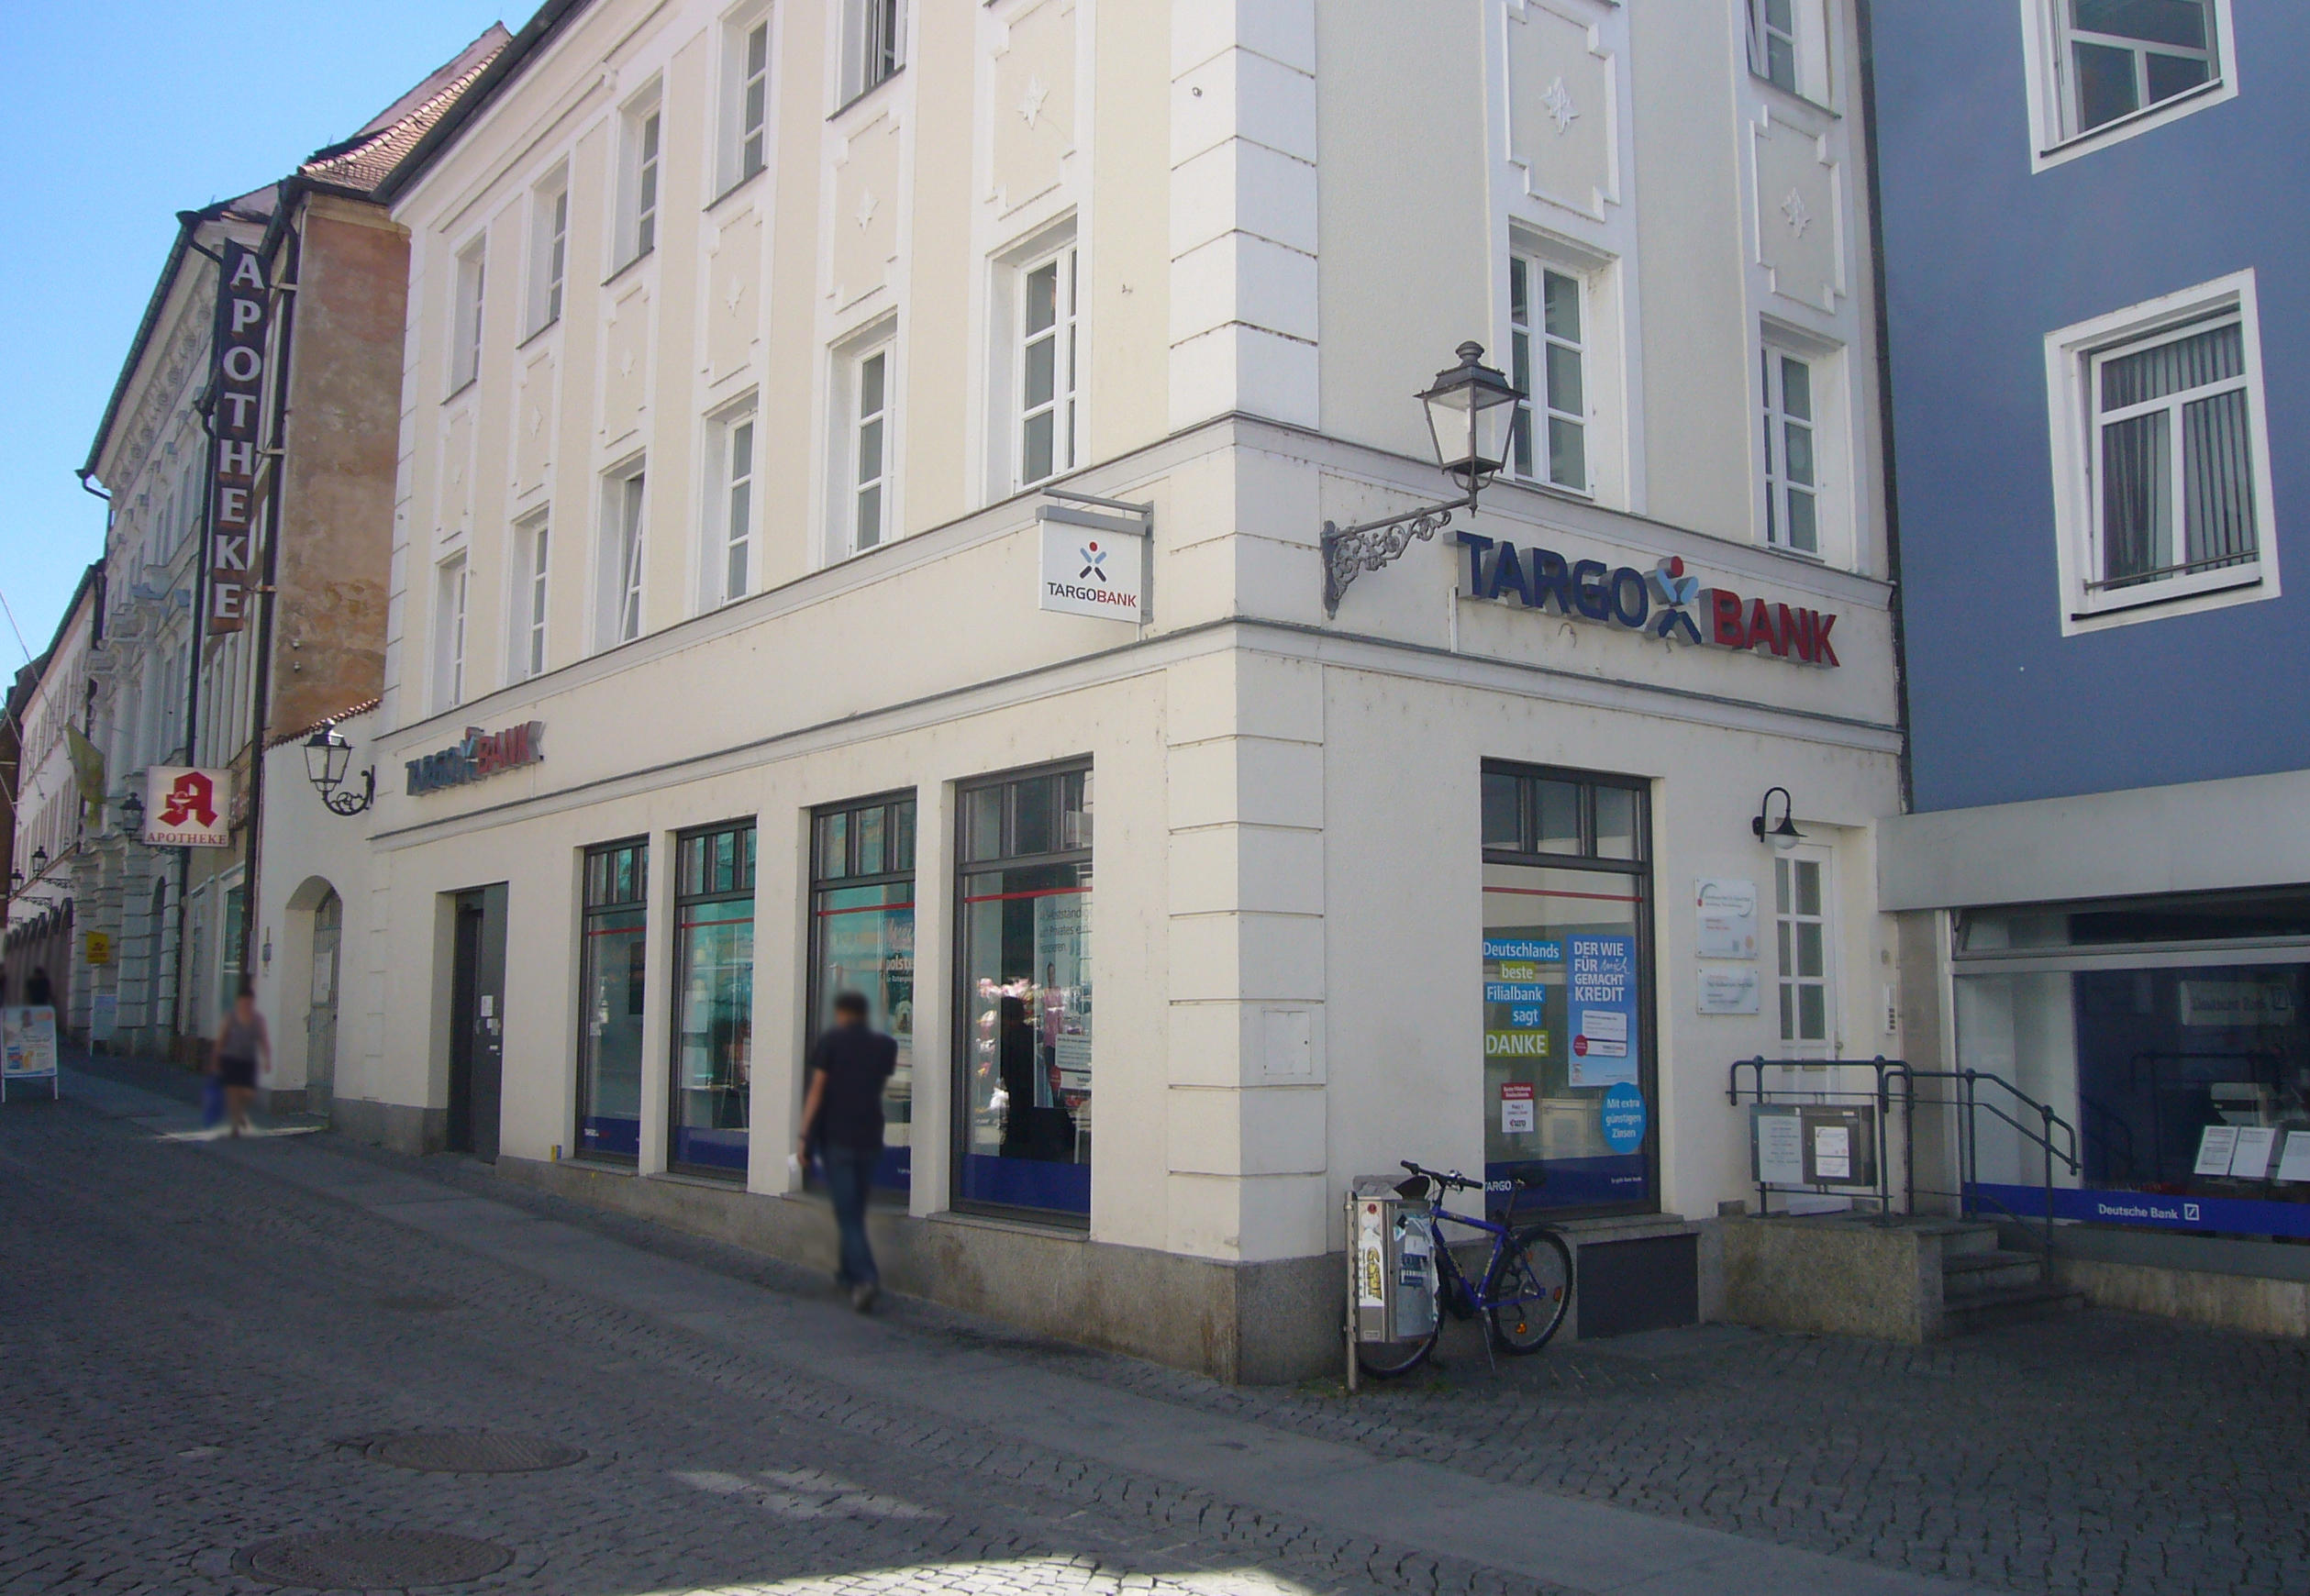 Bild 1 TARGOBANK in Amberg